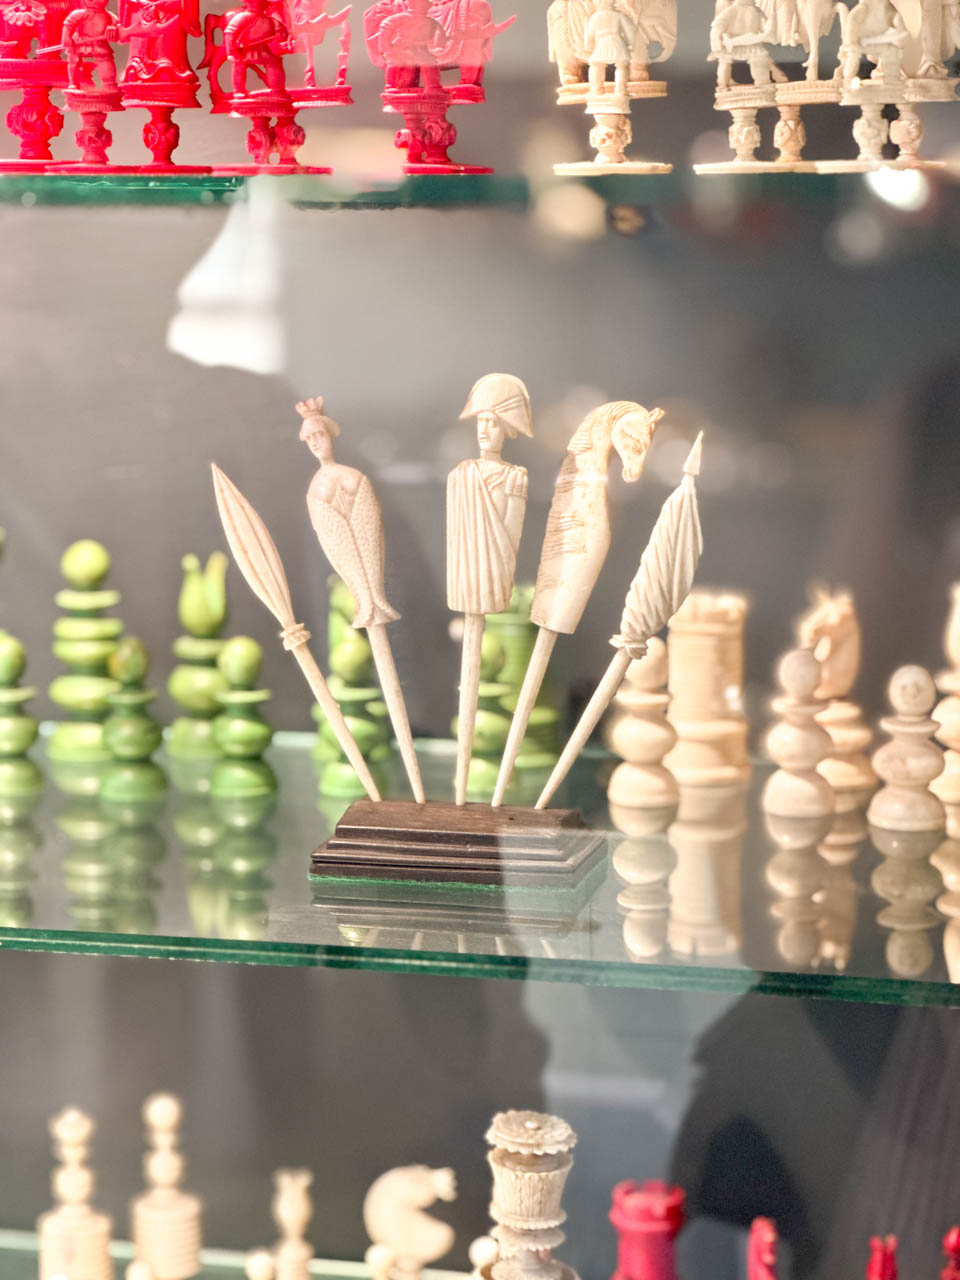 Chess figures on display at the Casa Rocca Piccola in Valletta, Malta